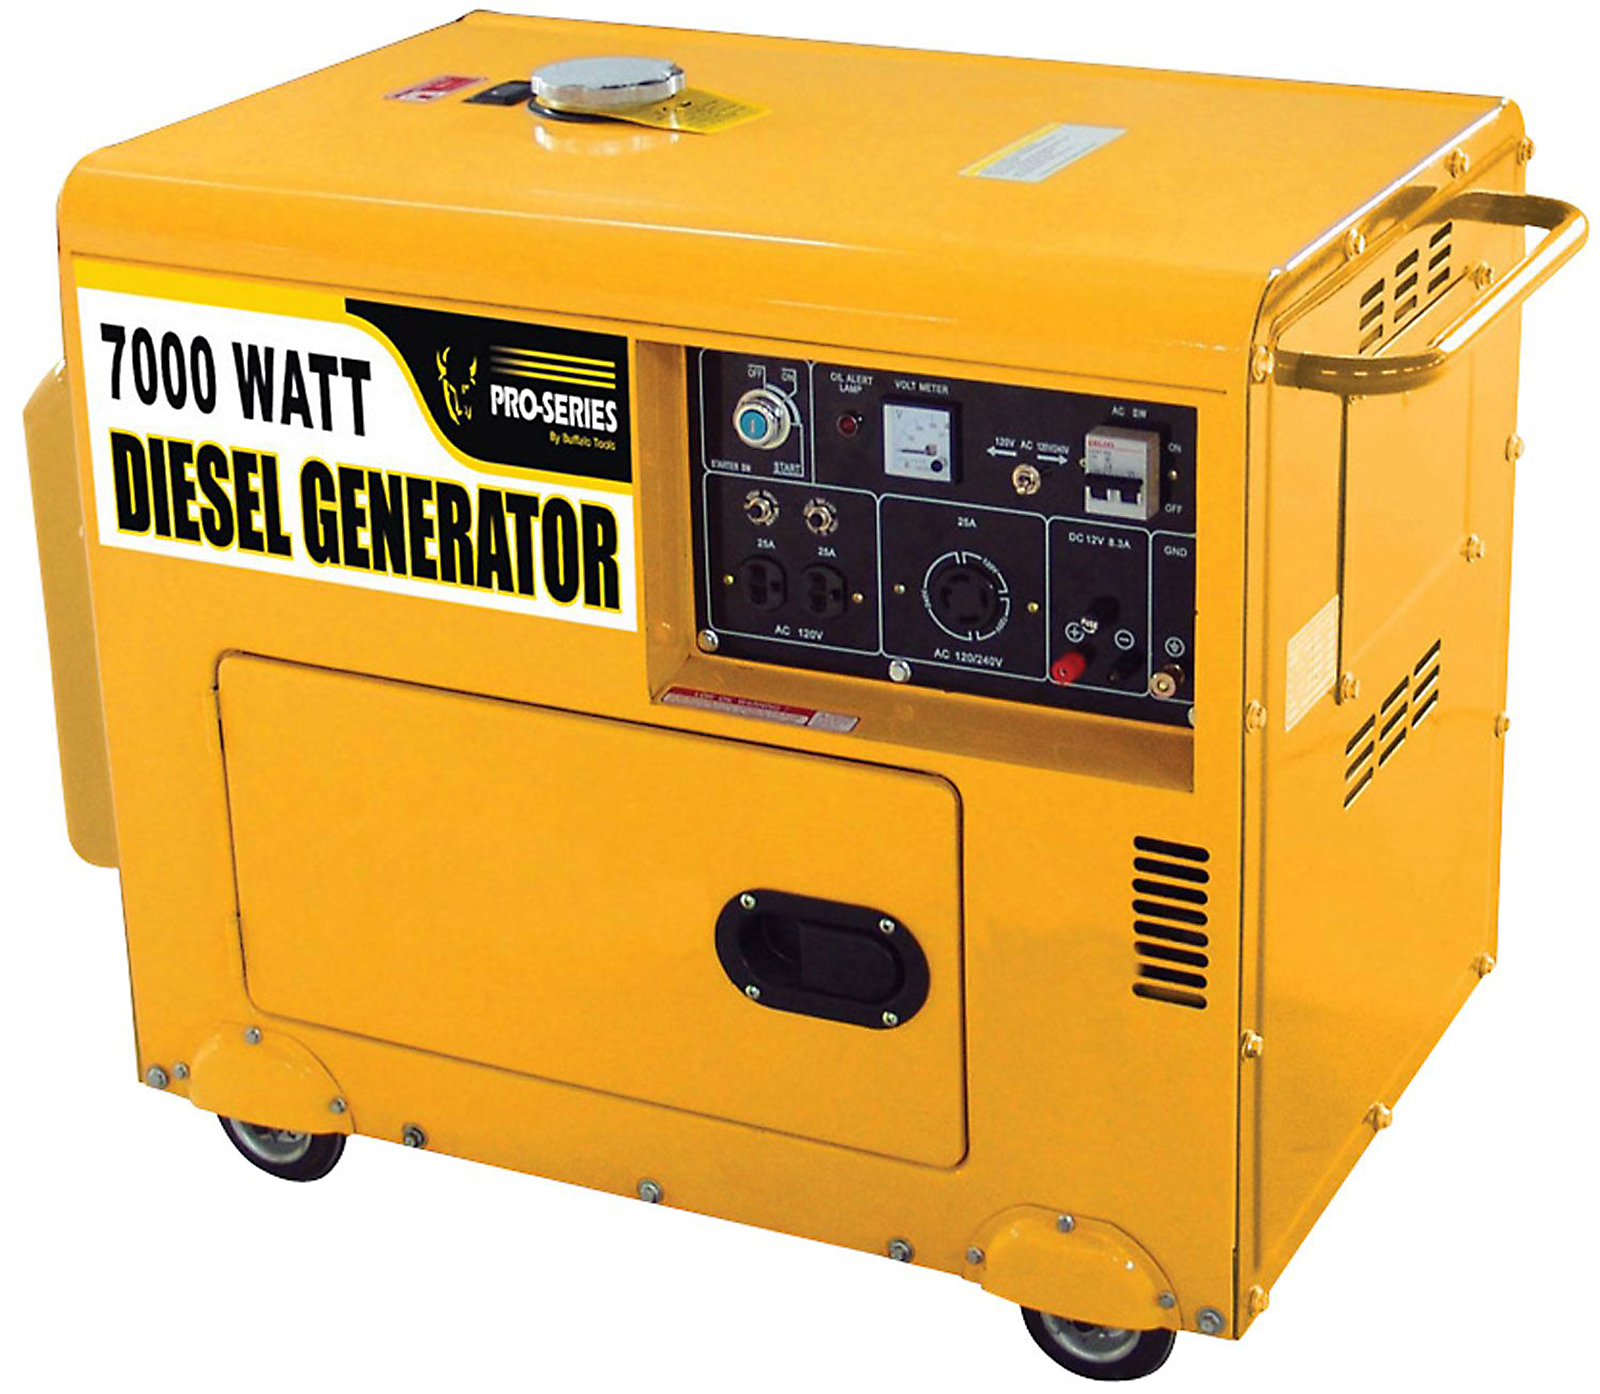 7000 Watt Diesel Generator